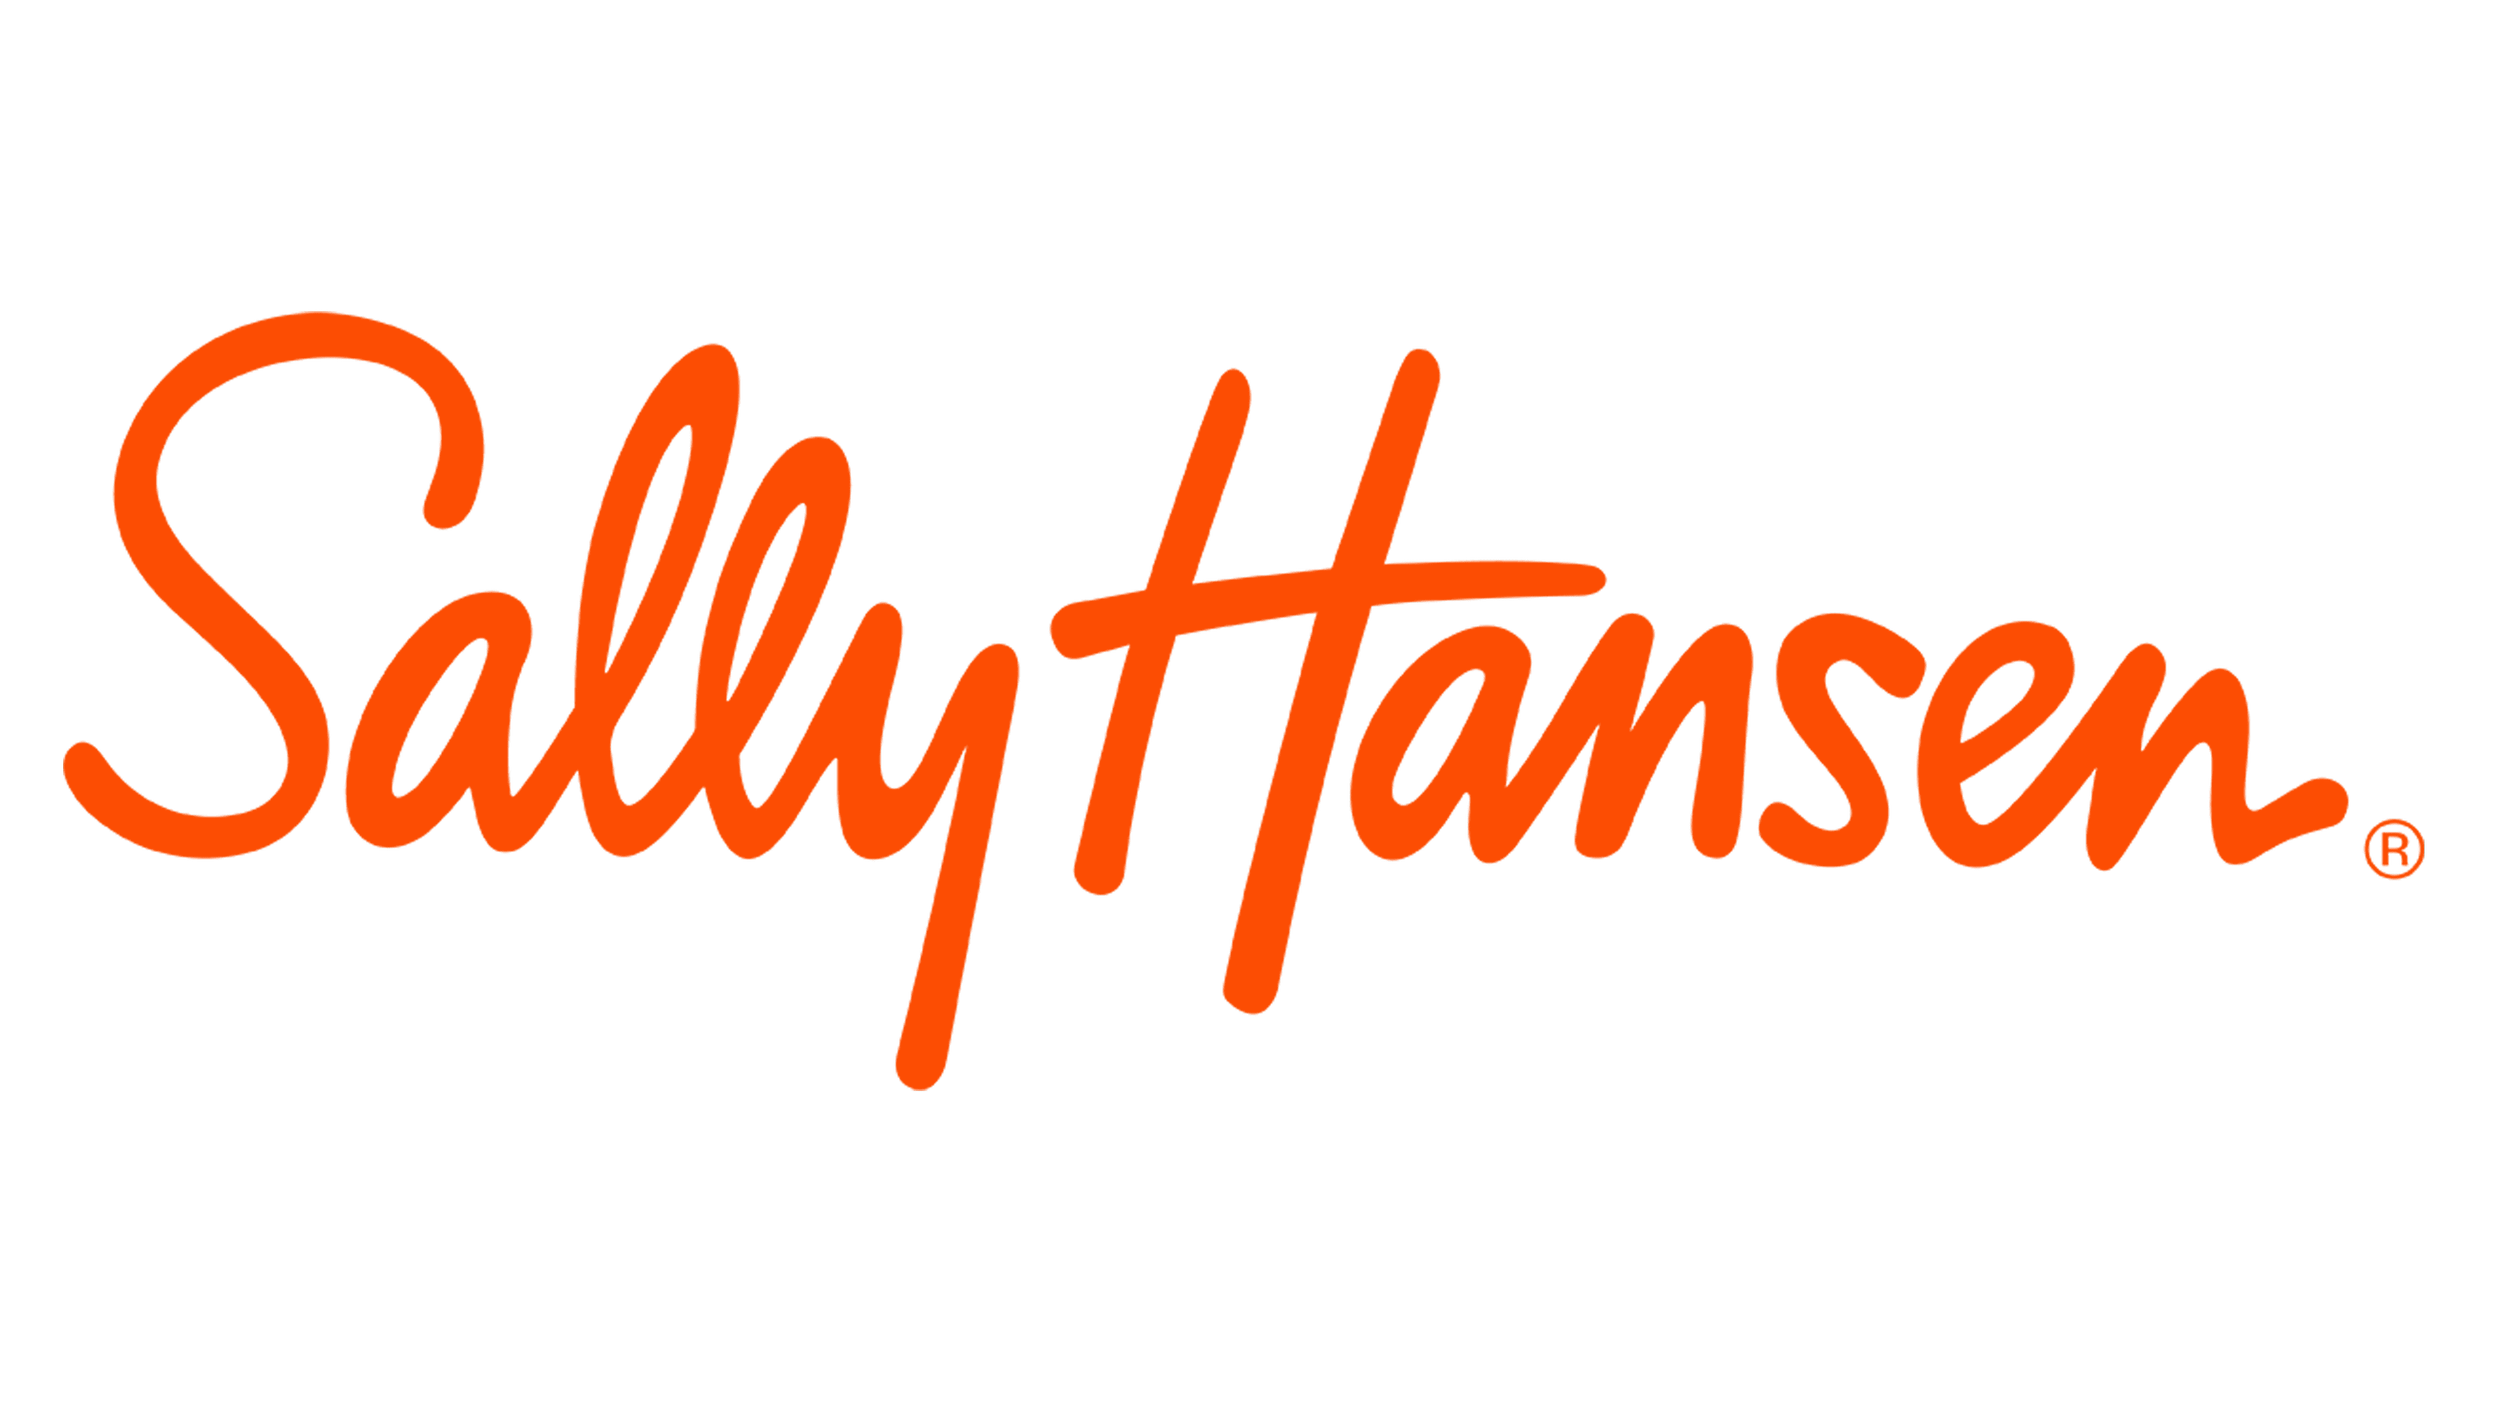 Sally-Hansen-logo.png